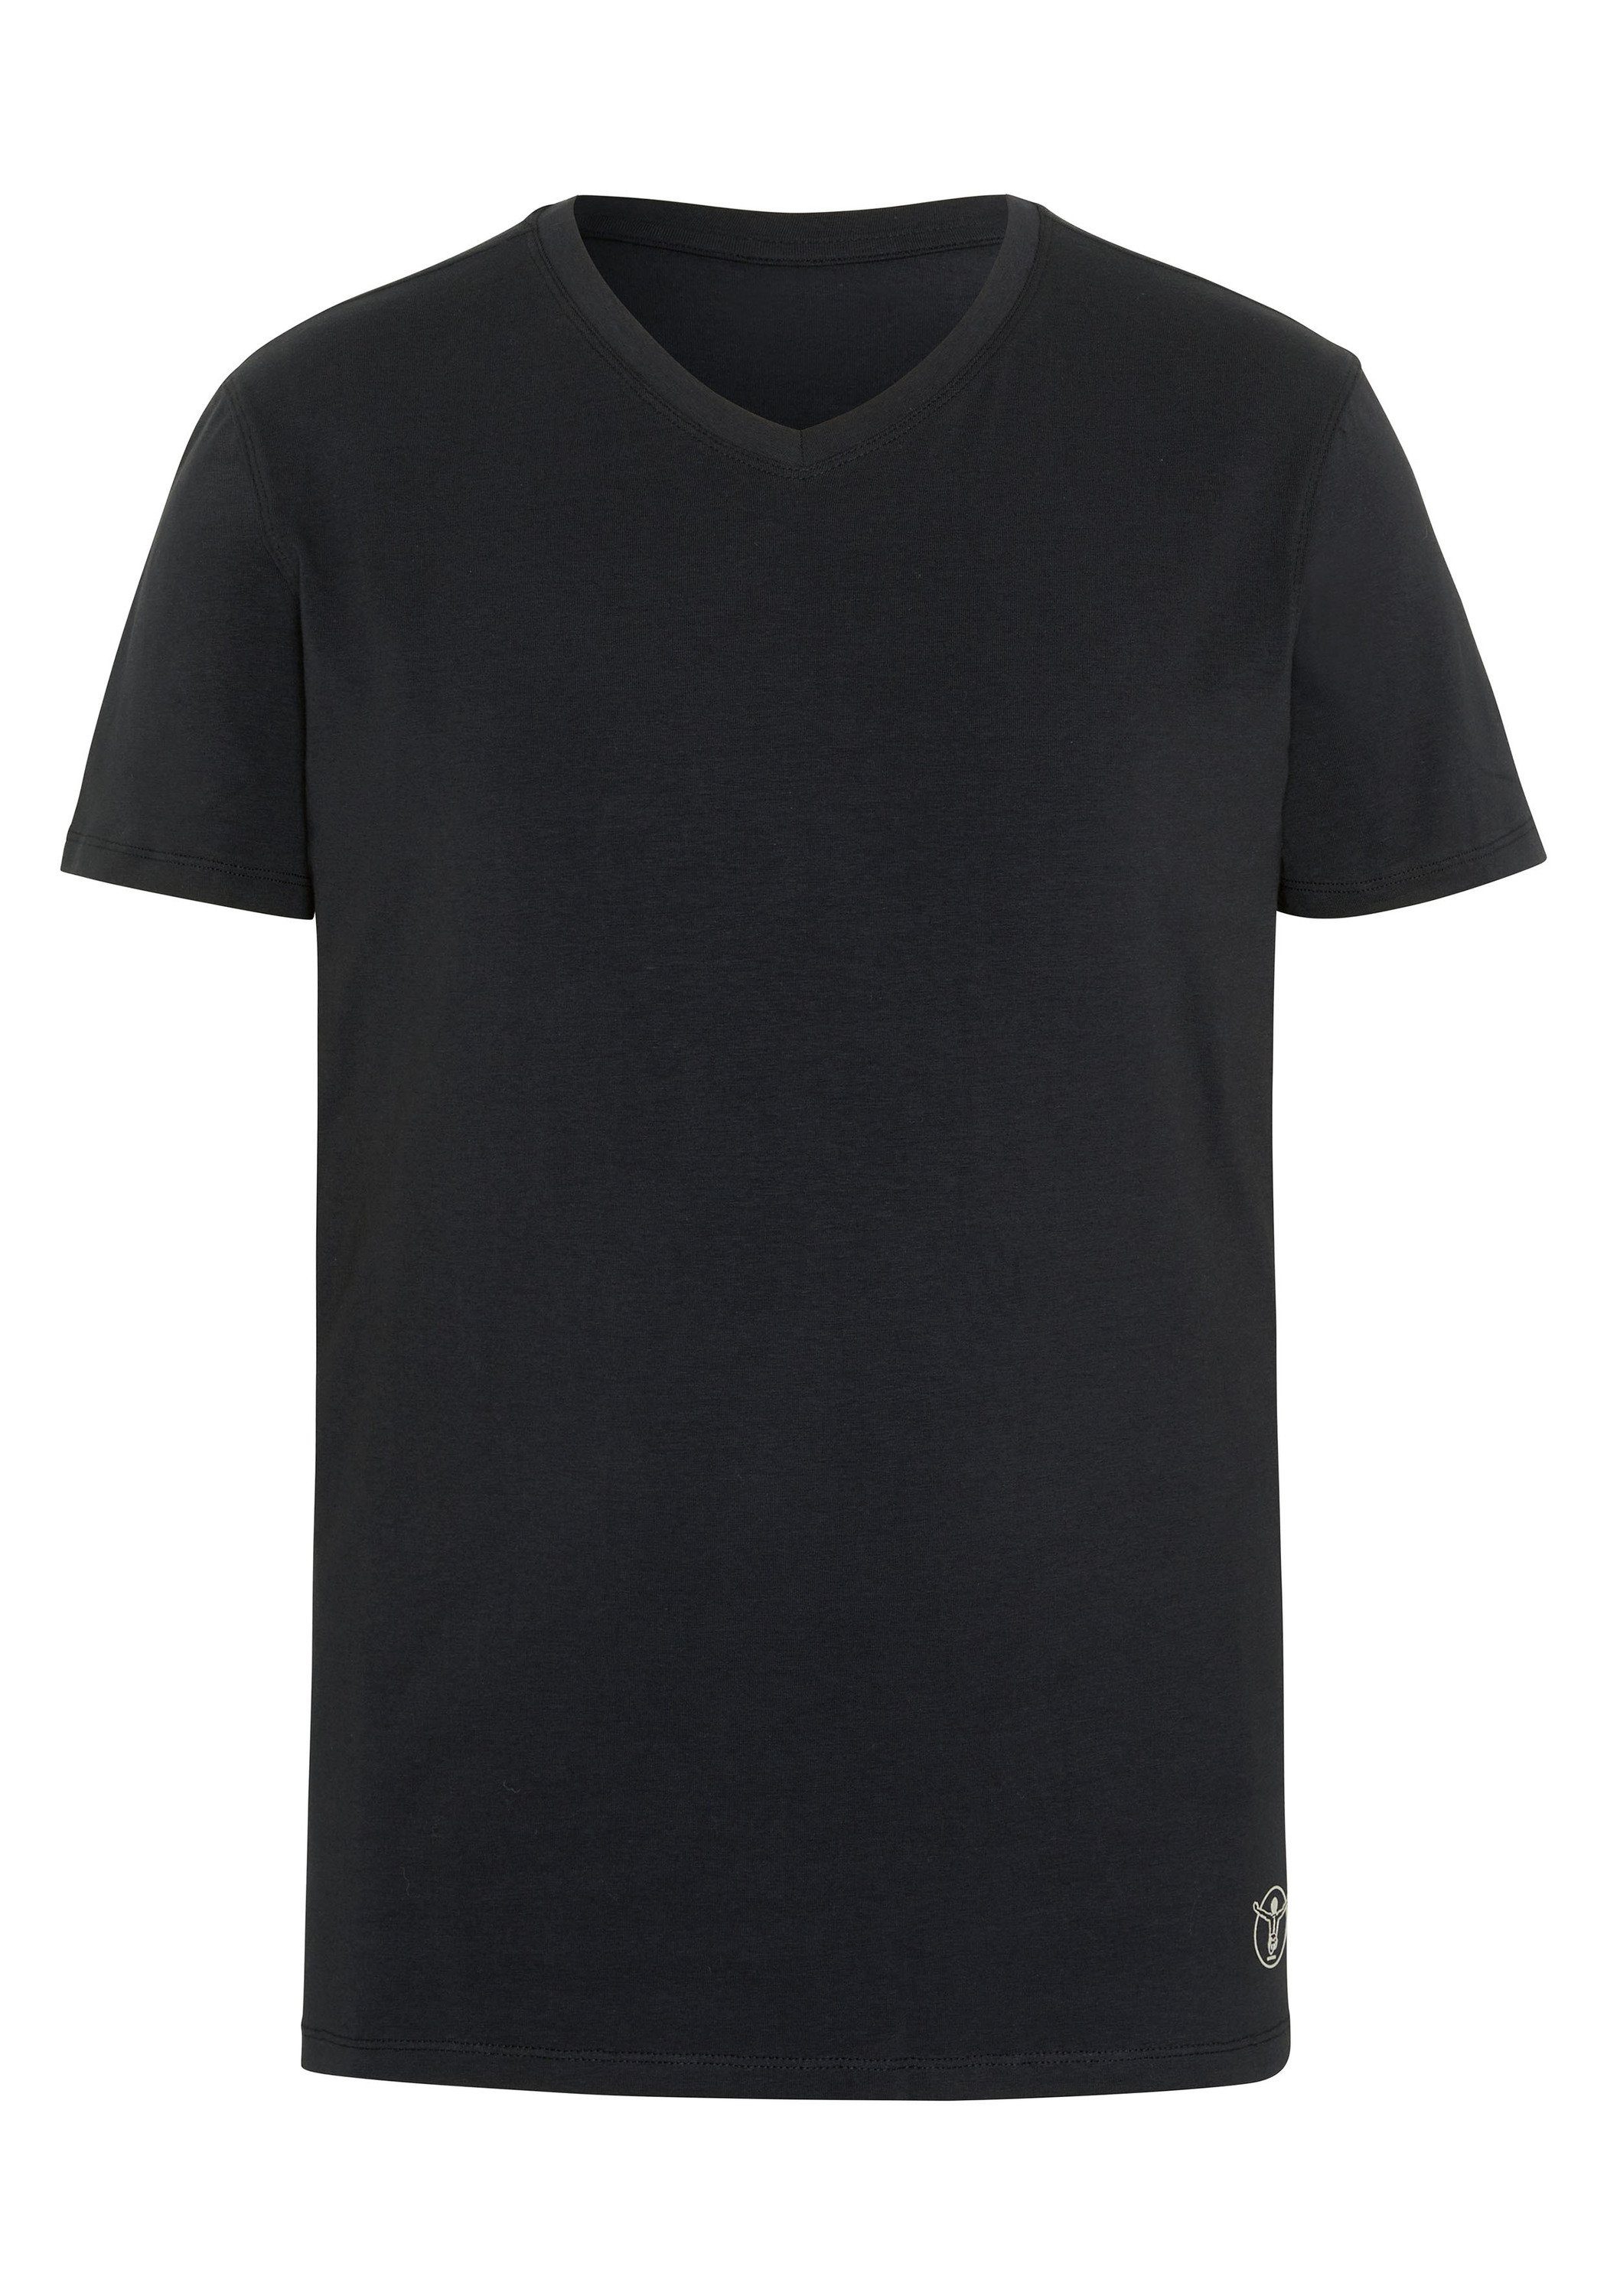 Chiemsee T-Shirt T-Shirt im Doppelpack mit V-Neck 1 19-3911 Black Beauty